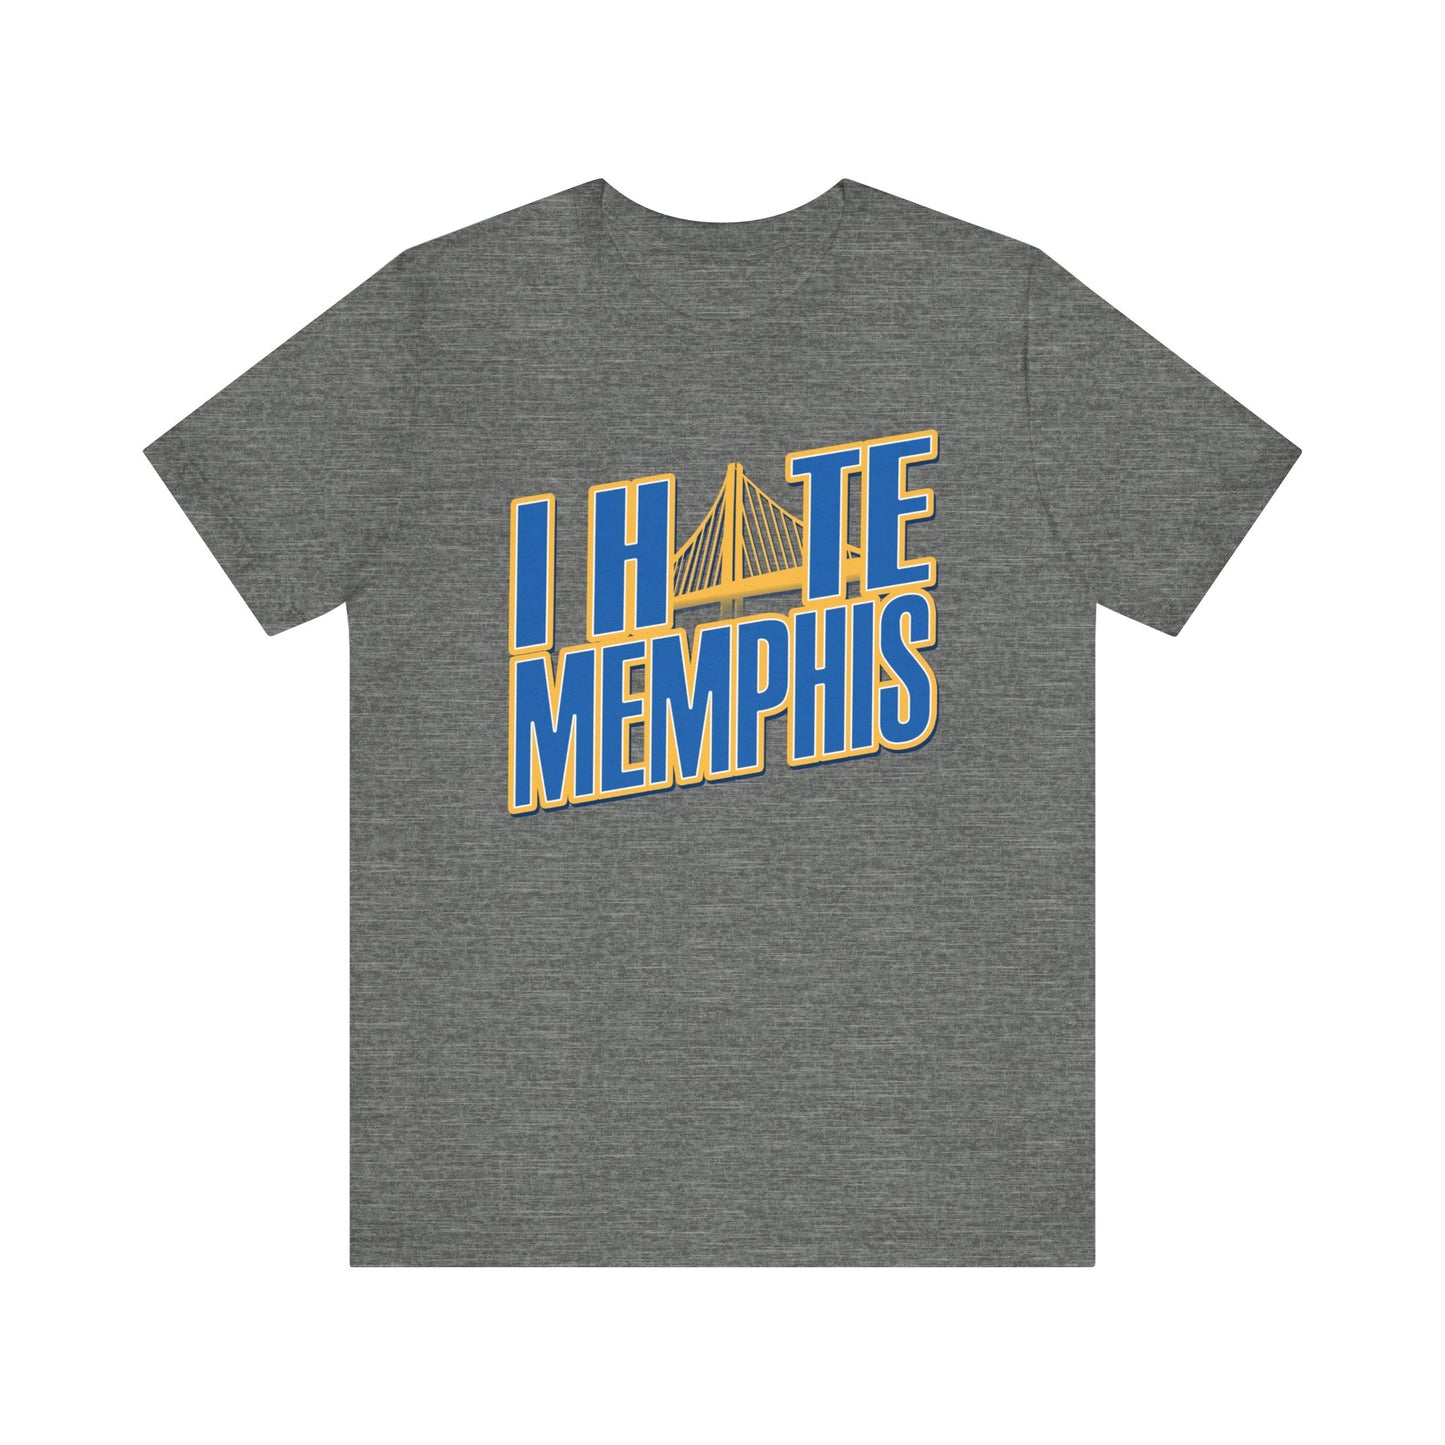 I Hate Memfiss (for Golden State fans) - Unisex Jersey Short Sleeve Tee